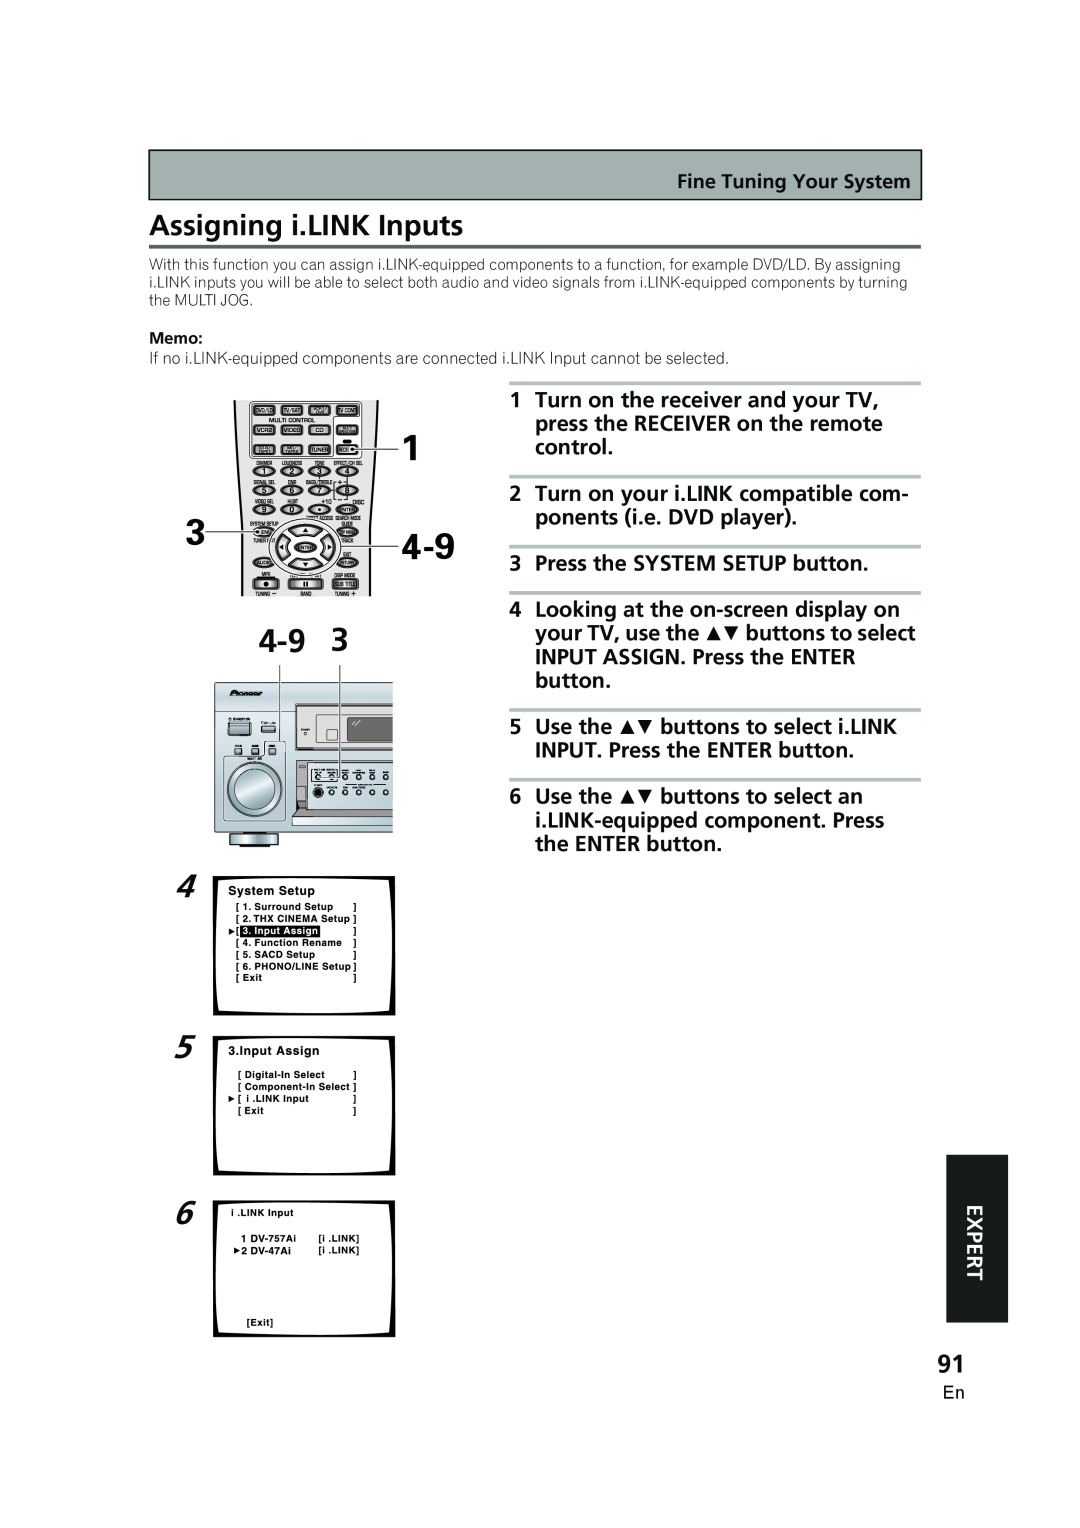 Pioneer VSX-AX5i-G manual 4-93, Assigning i.LINK Inputs, Expert 